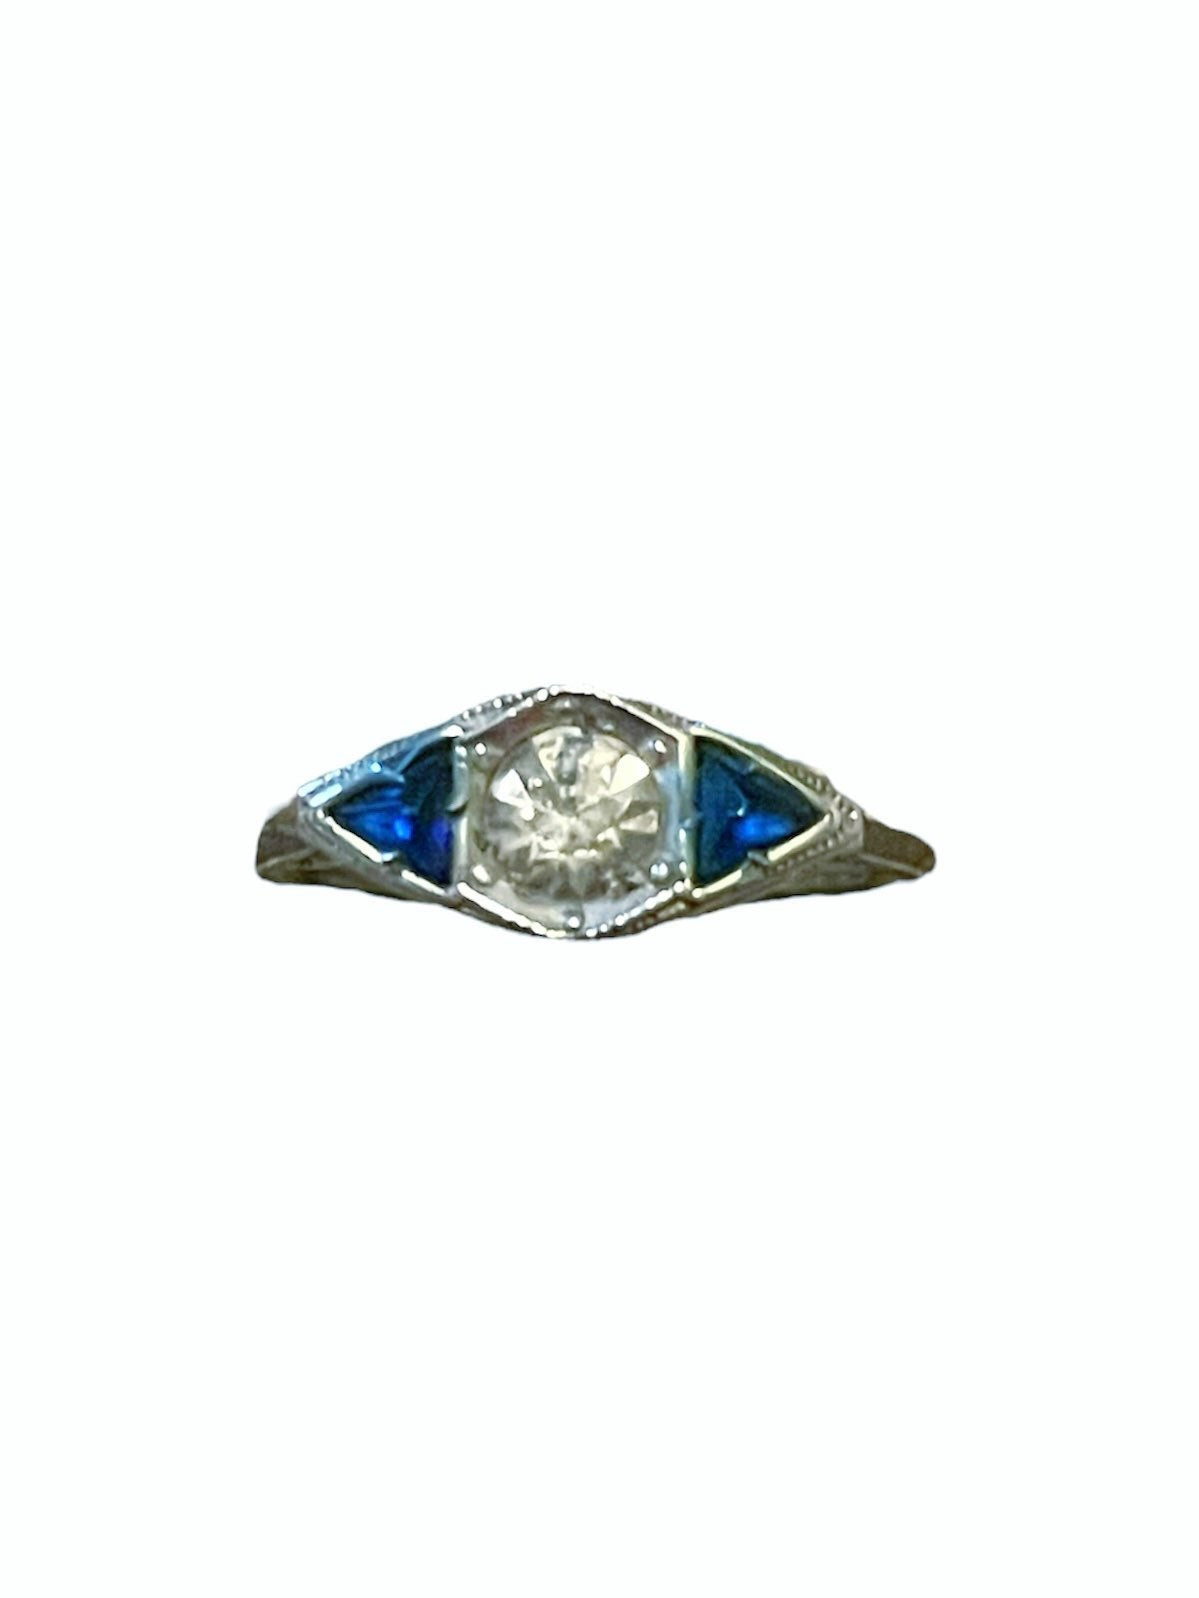 Art Nouveau Saphire & Topaz Filigree Sterling Silver Engagement Ring